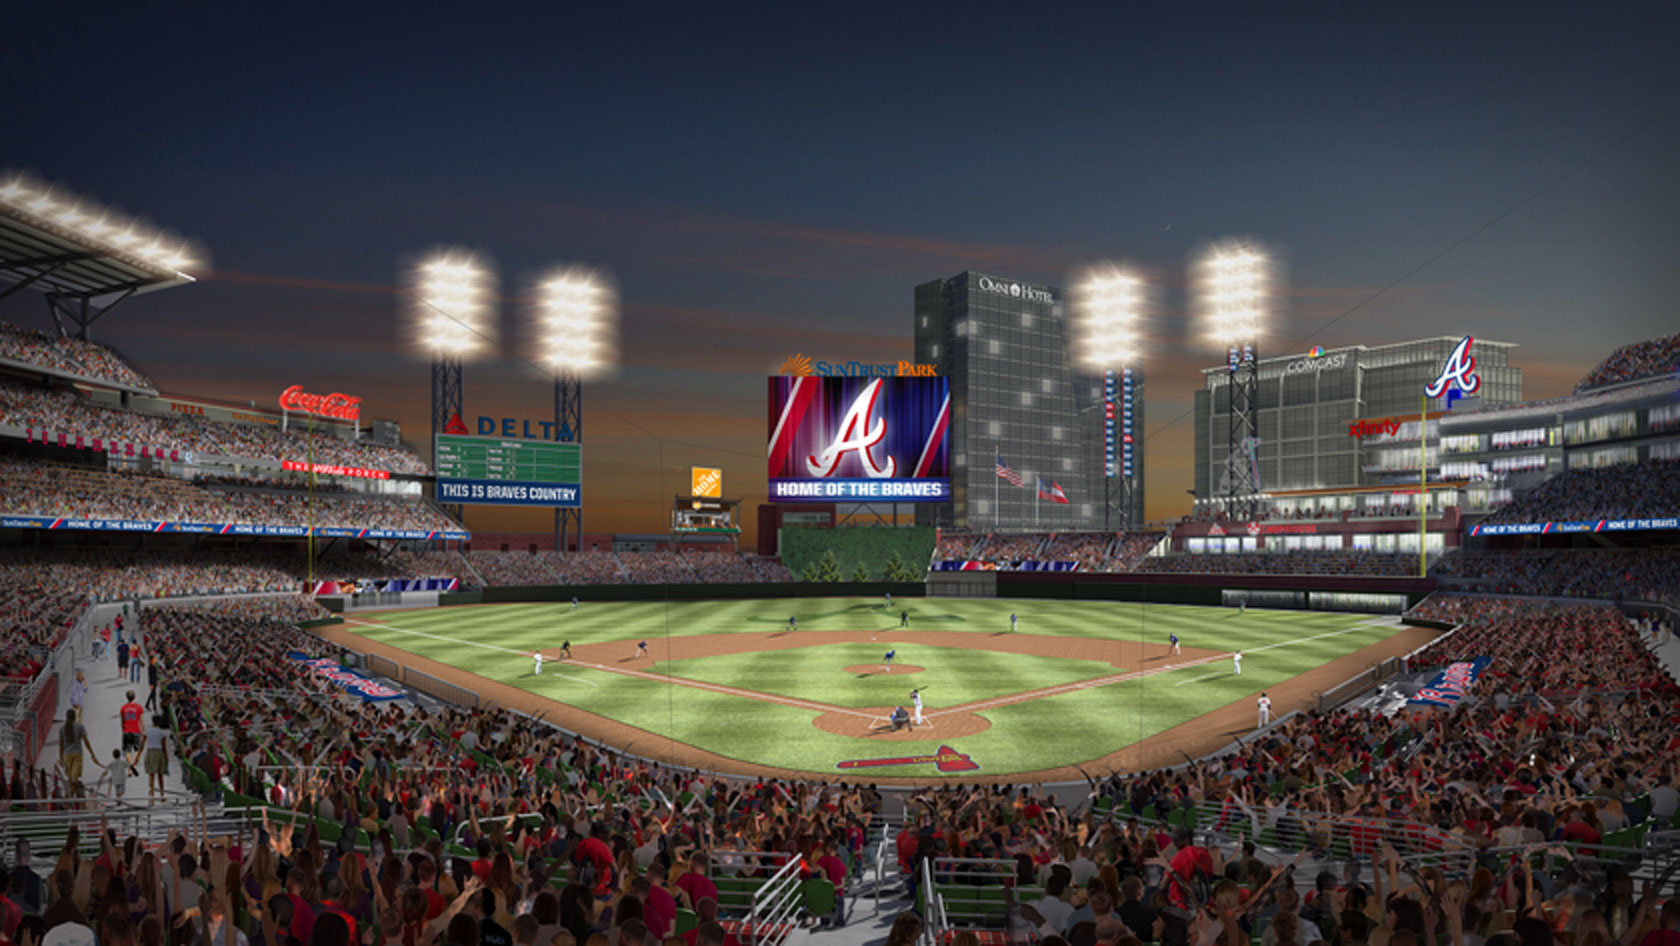 Atlanta Braves 3D StadiumViews Picture Frame SunTrust Park